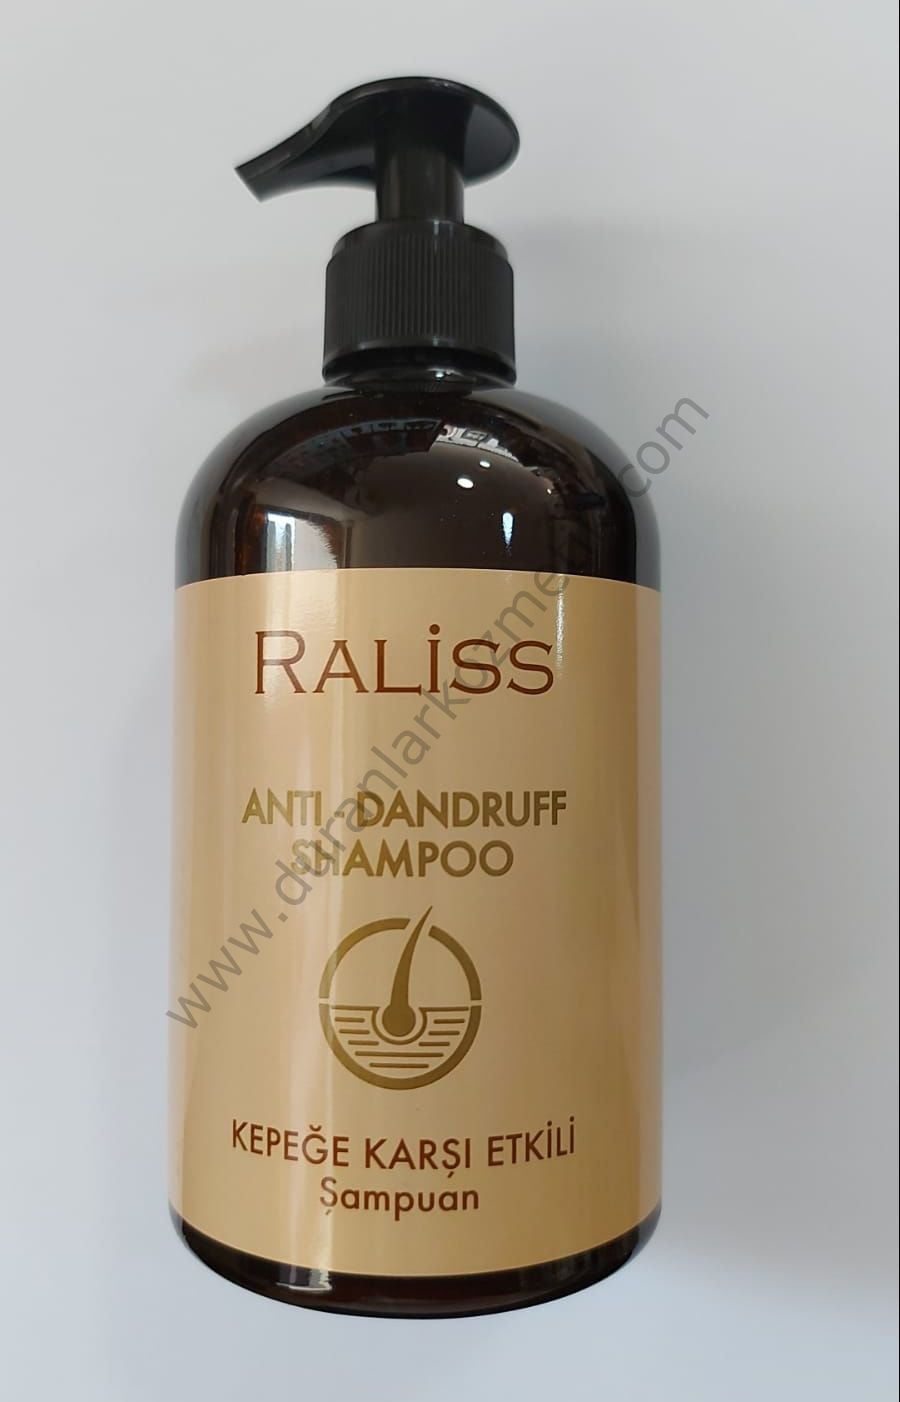 Raliss anti dandruff shampoo 500 ml kepeğe karşı etkili